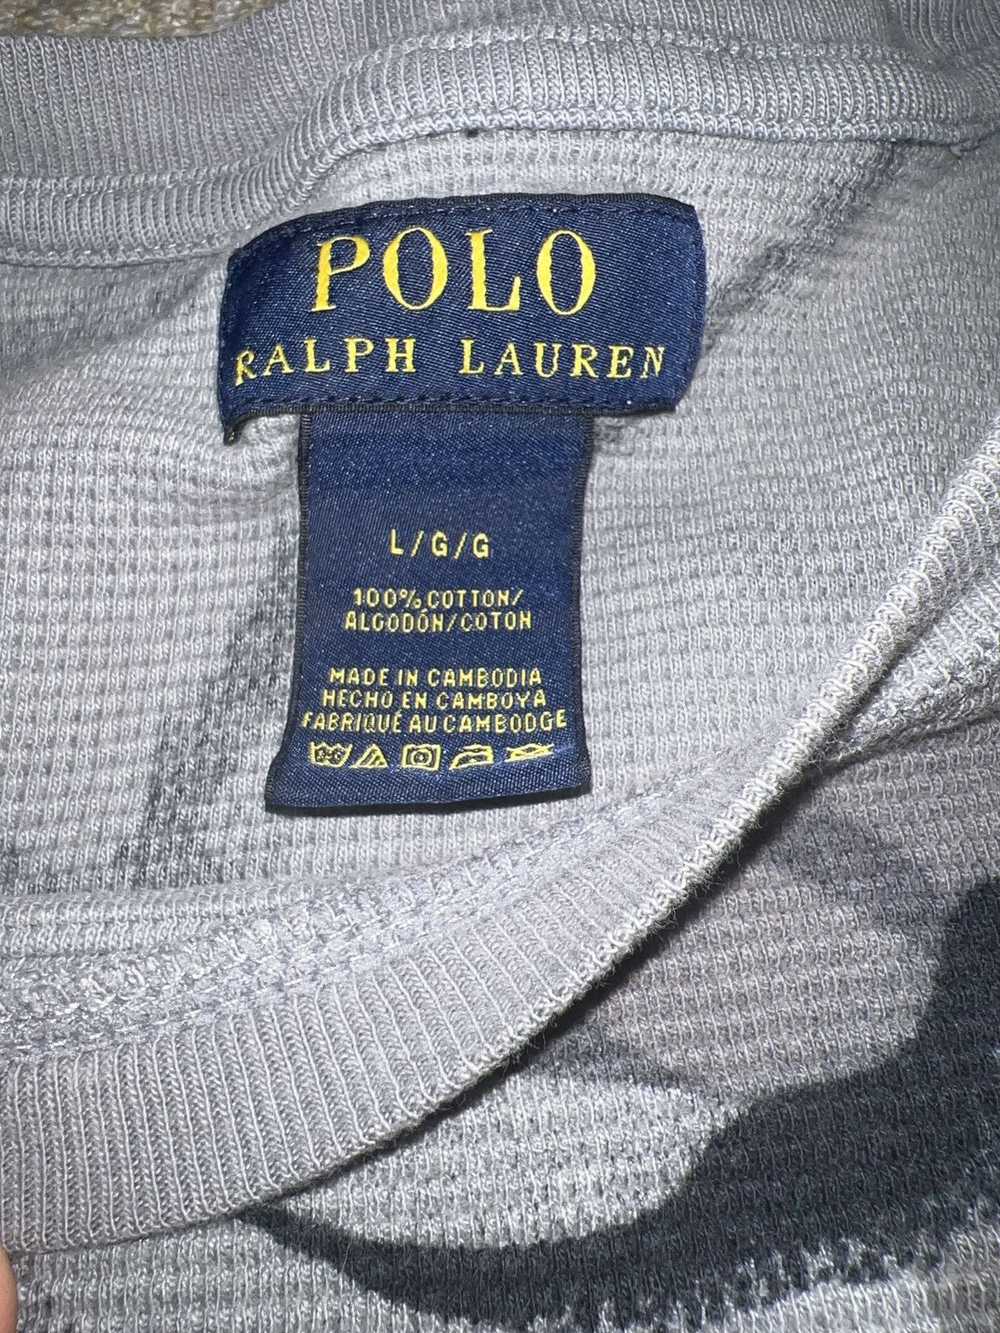 Polo Ralph Lauren Polo Ralph Lauren Grey Camo T-S… - image 5